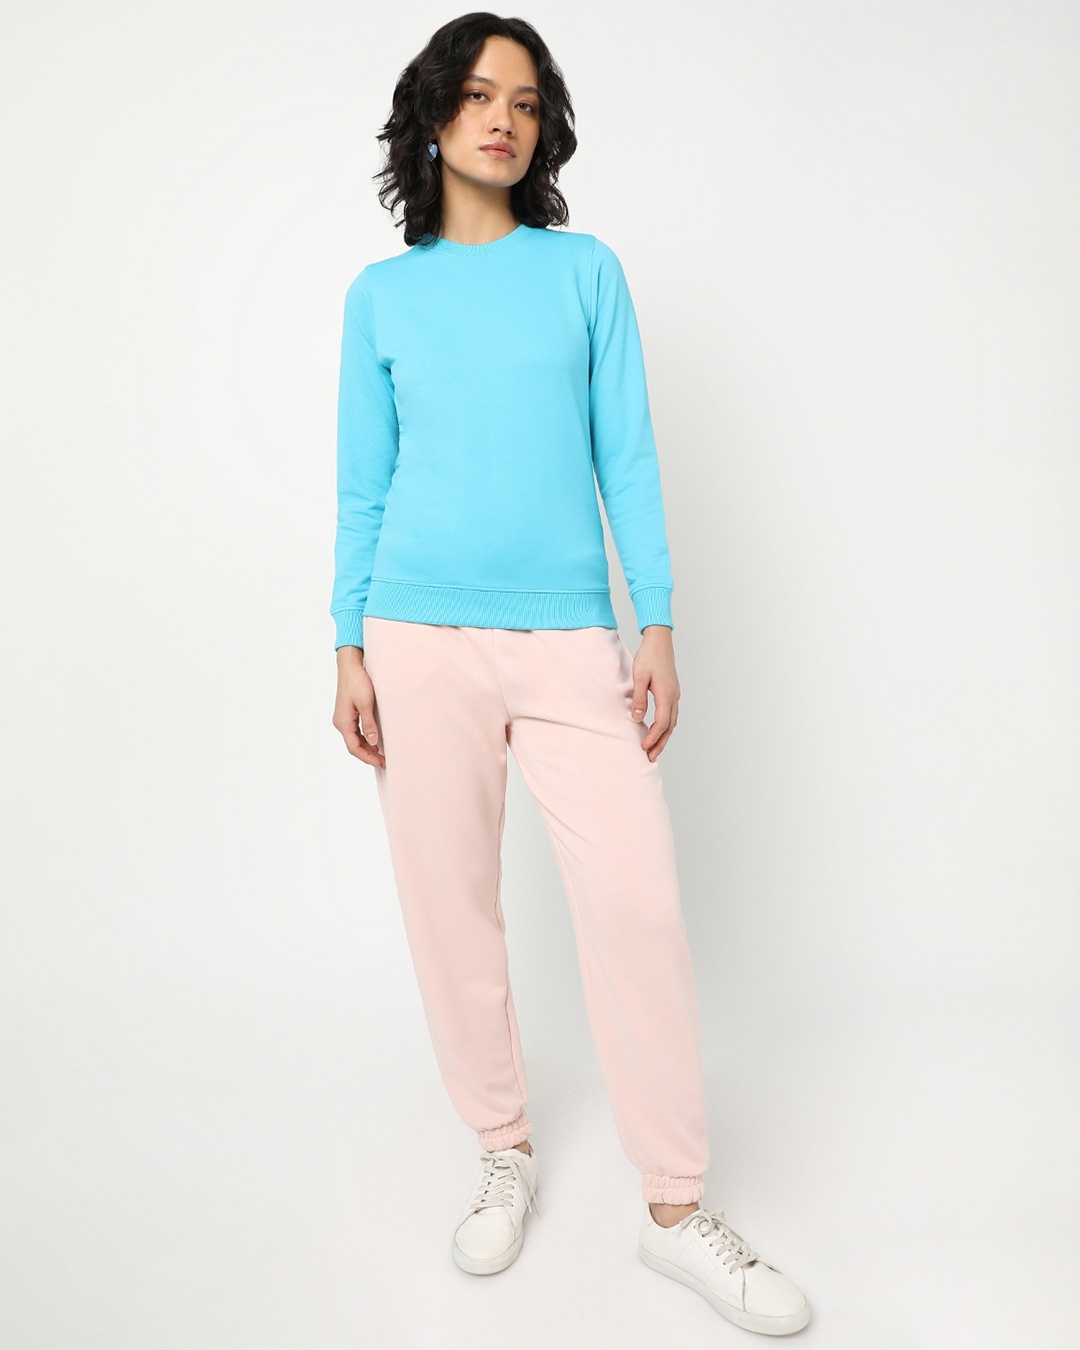 Shop Upbeat Blue Fleece Sweatshirt-Full